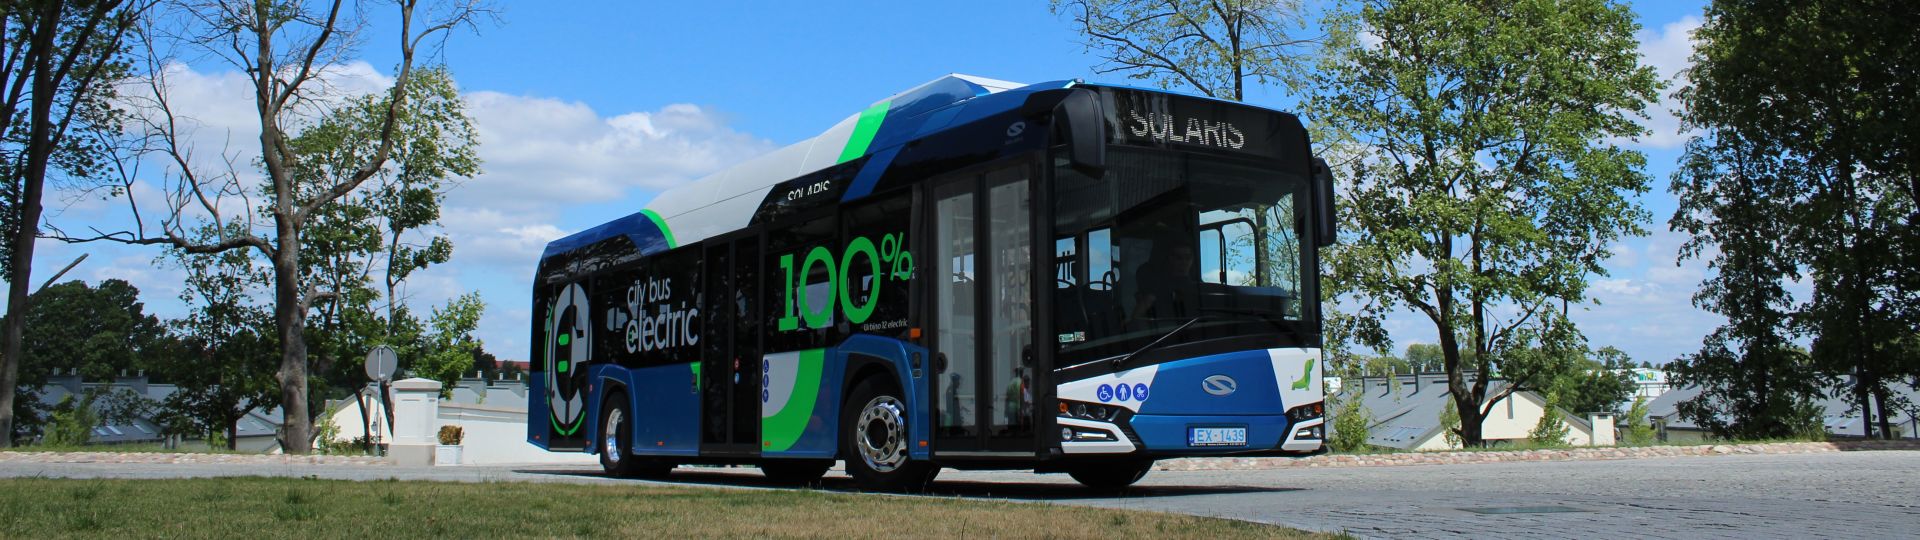 Tests run on electric Solaris in Estonia